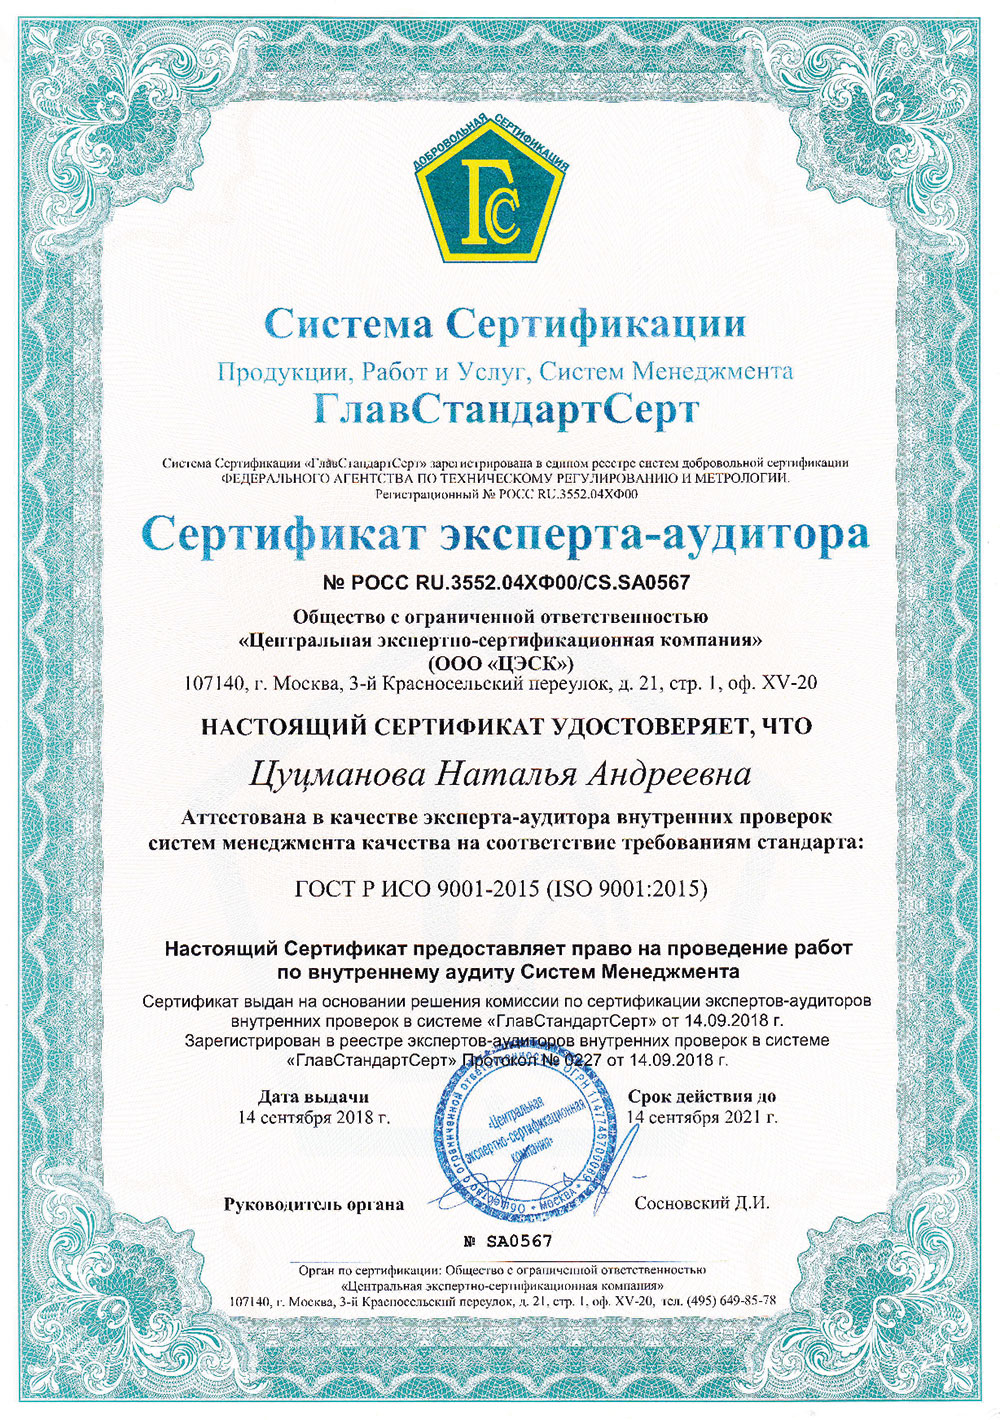 GlavStandardCert — Certificate of the audit expert